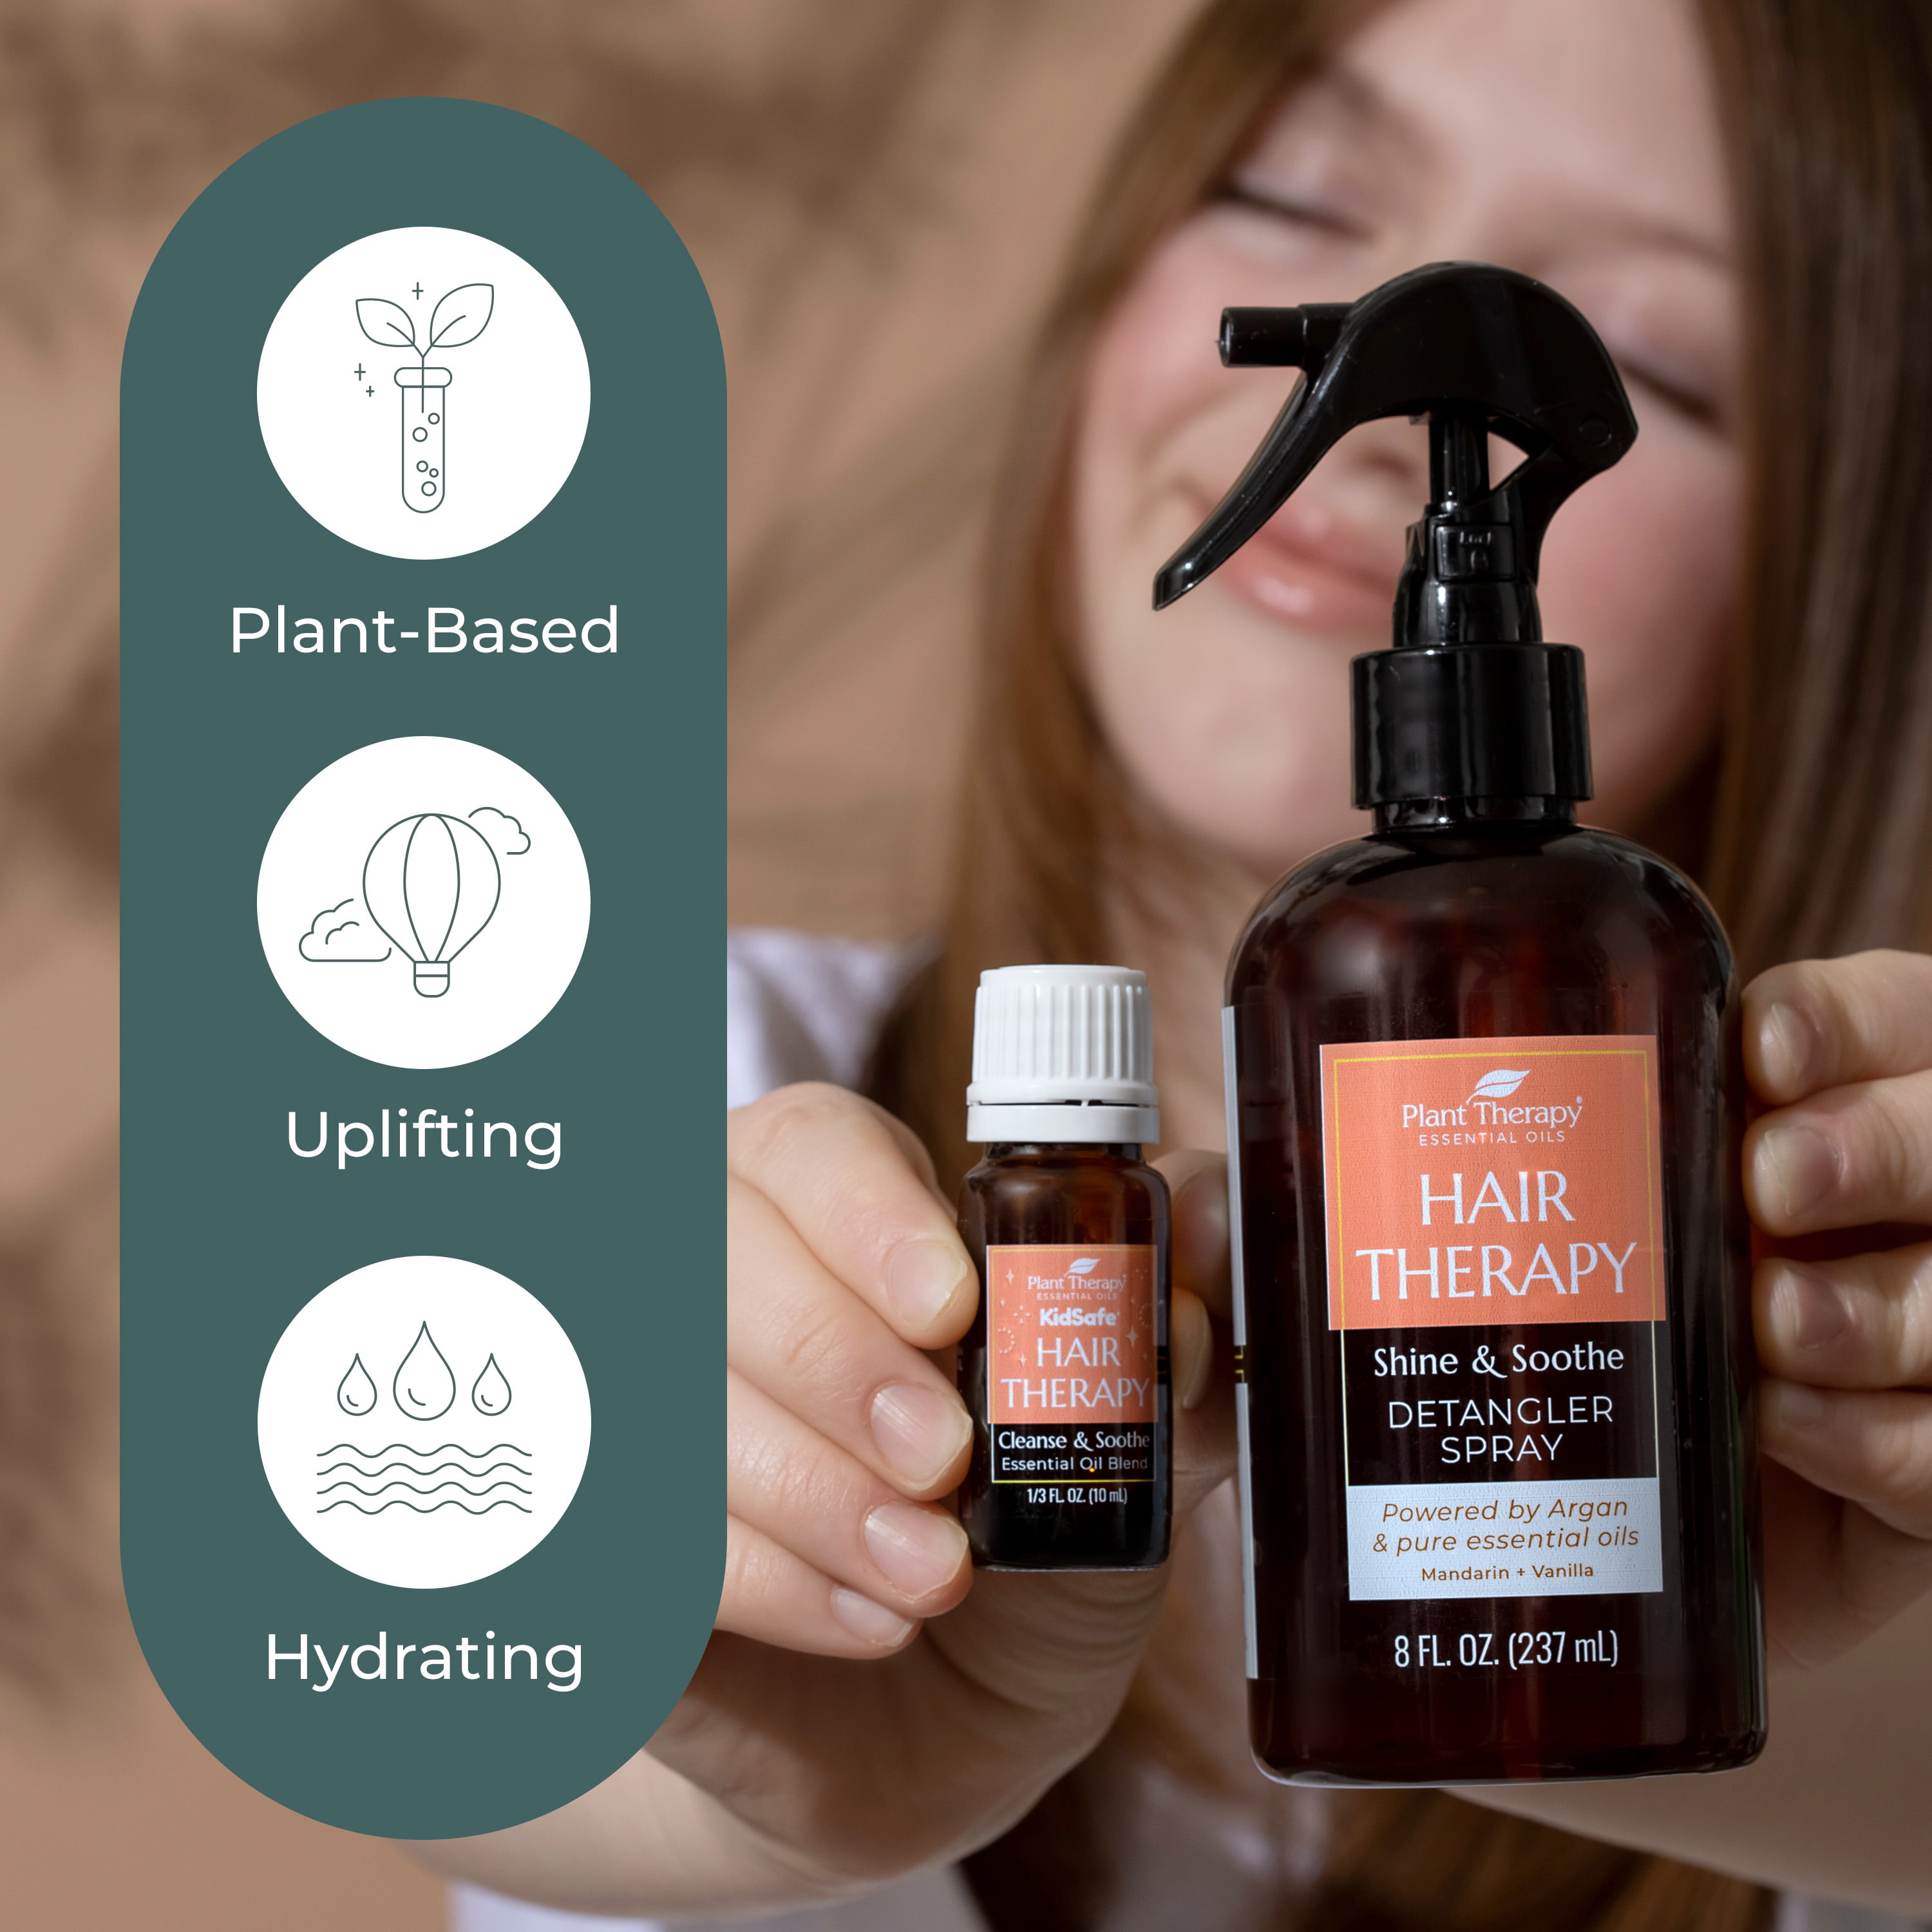 Plant Therapy Hair Therapy Dry Shampoo Powder 1.7 oz Refreshing, Revitalizing, Rejuvenating with Rosemary, Cedarwood & Vitamin E